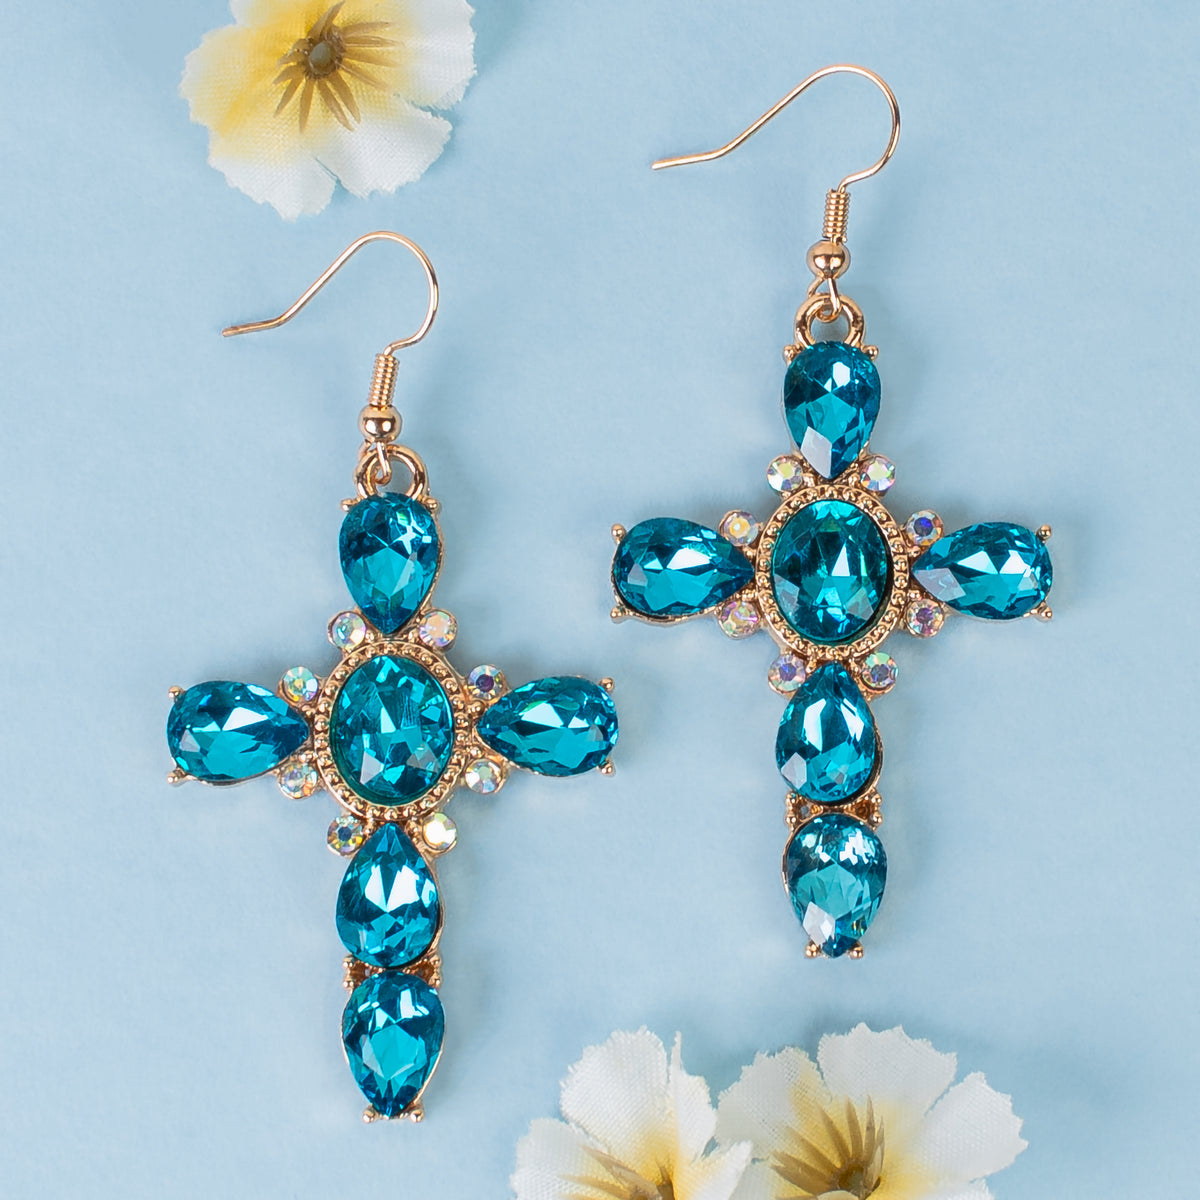 1326 - Rhinestone Cross Earrings - Turquoise